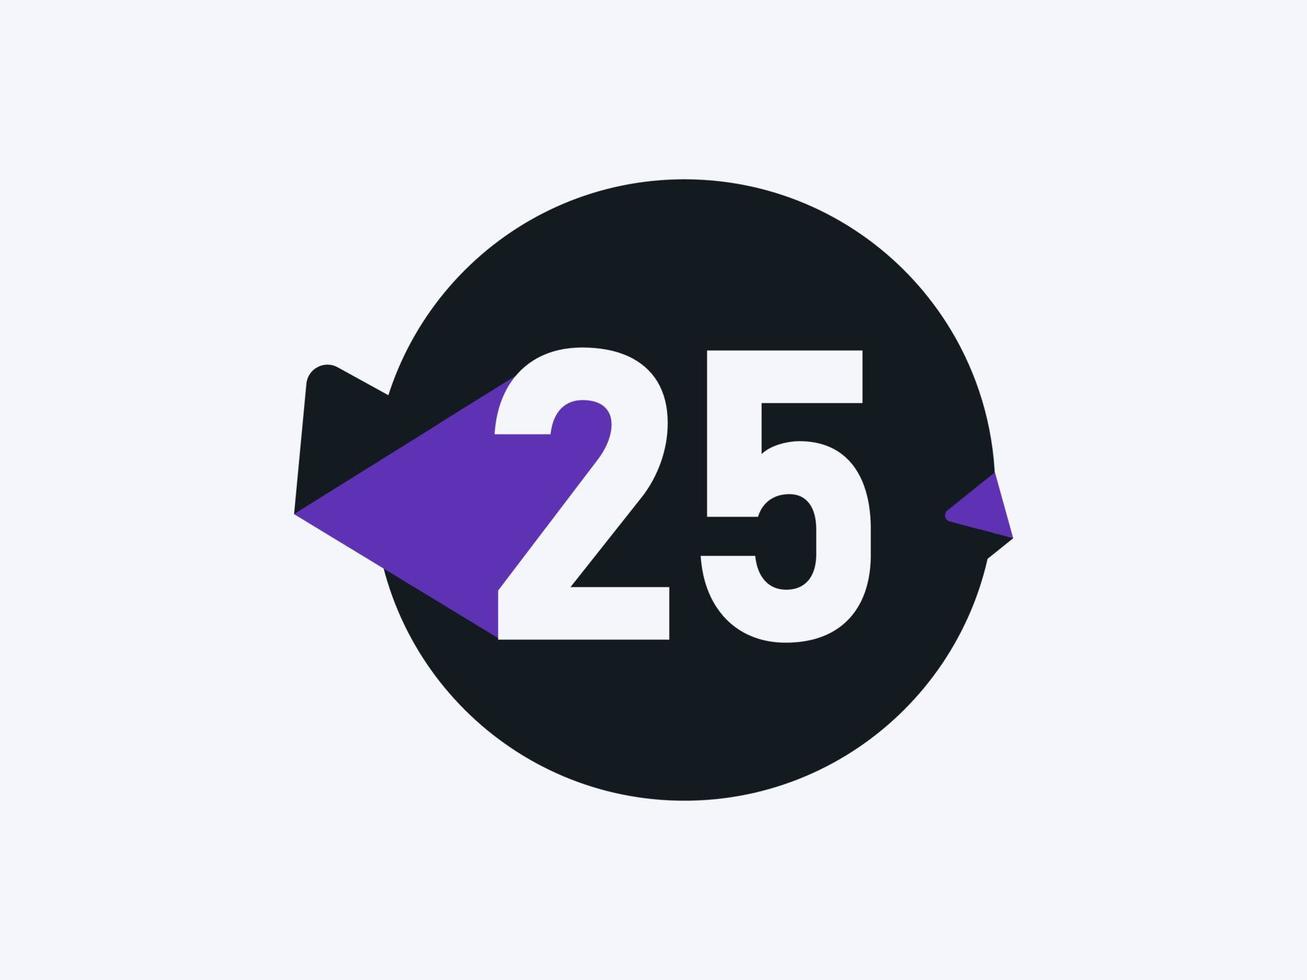 25 Number logo icon design vector image. Number logo icon design vector image